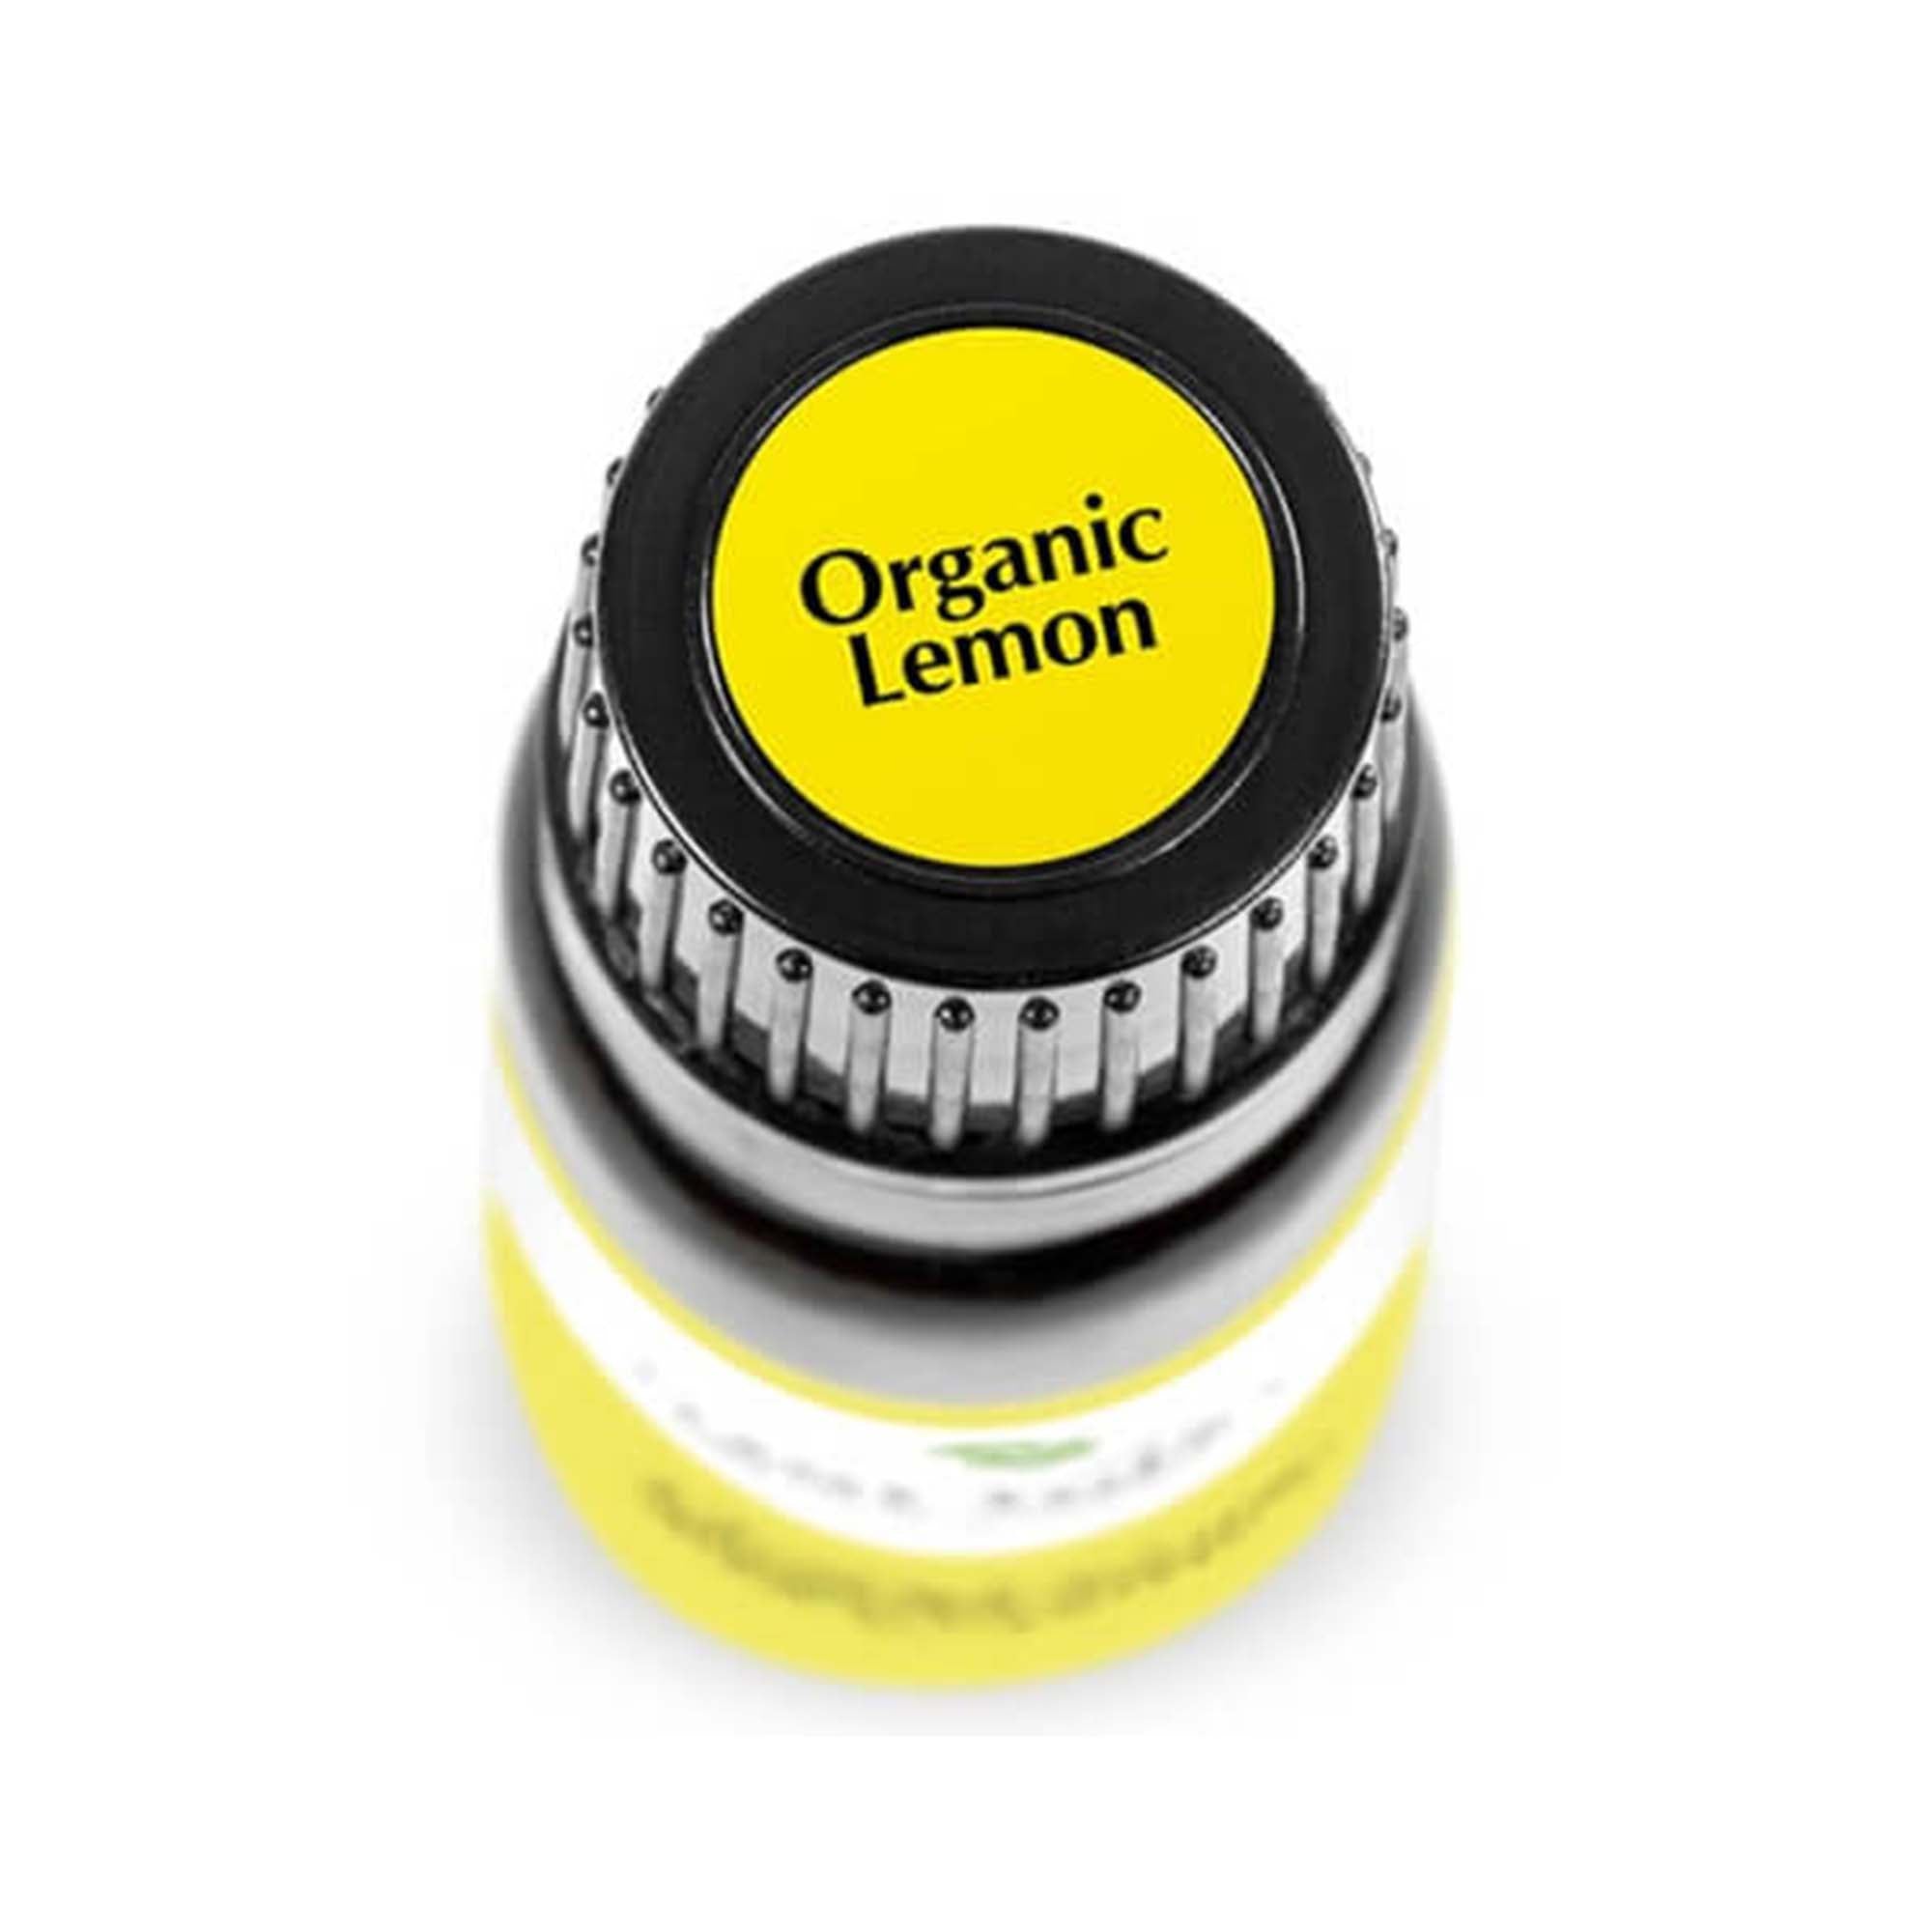 birds eye view of black bottle with yellow label, reads "organic lemon". 10 ml